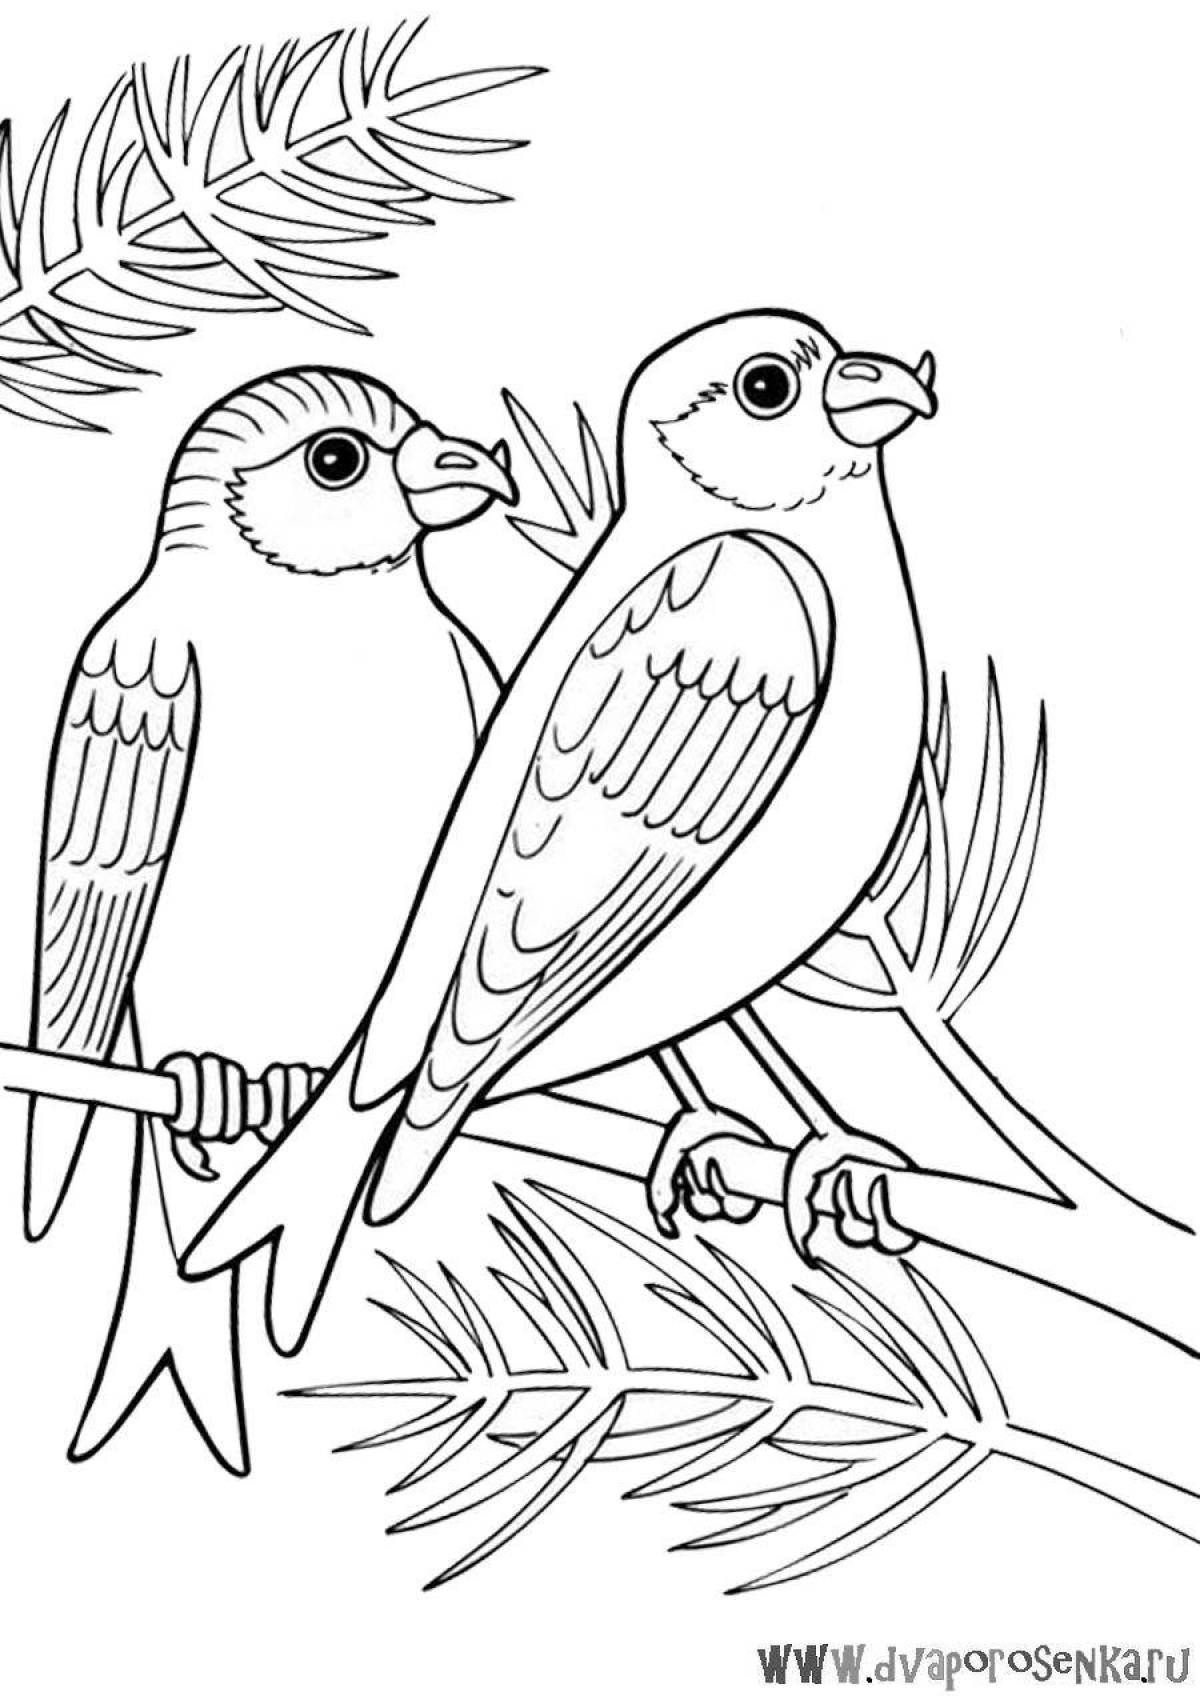 Coloring book joyful winter birds for children 3-4 years old